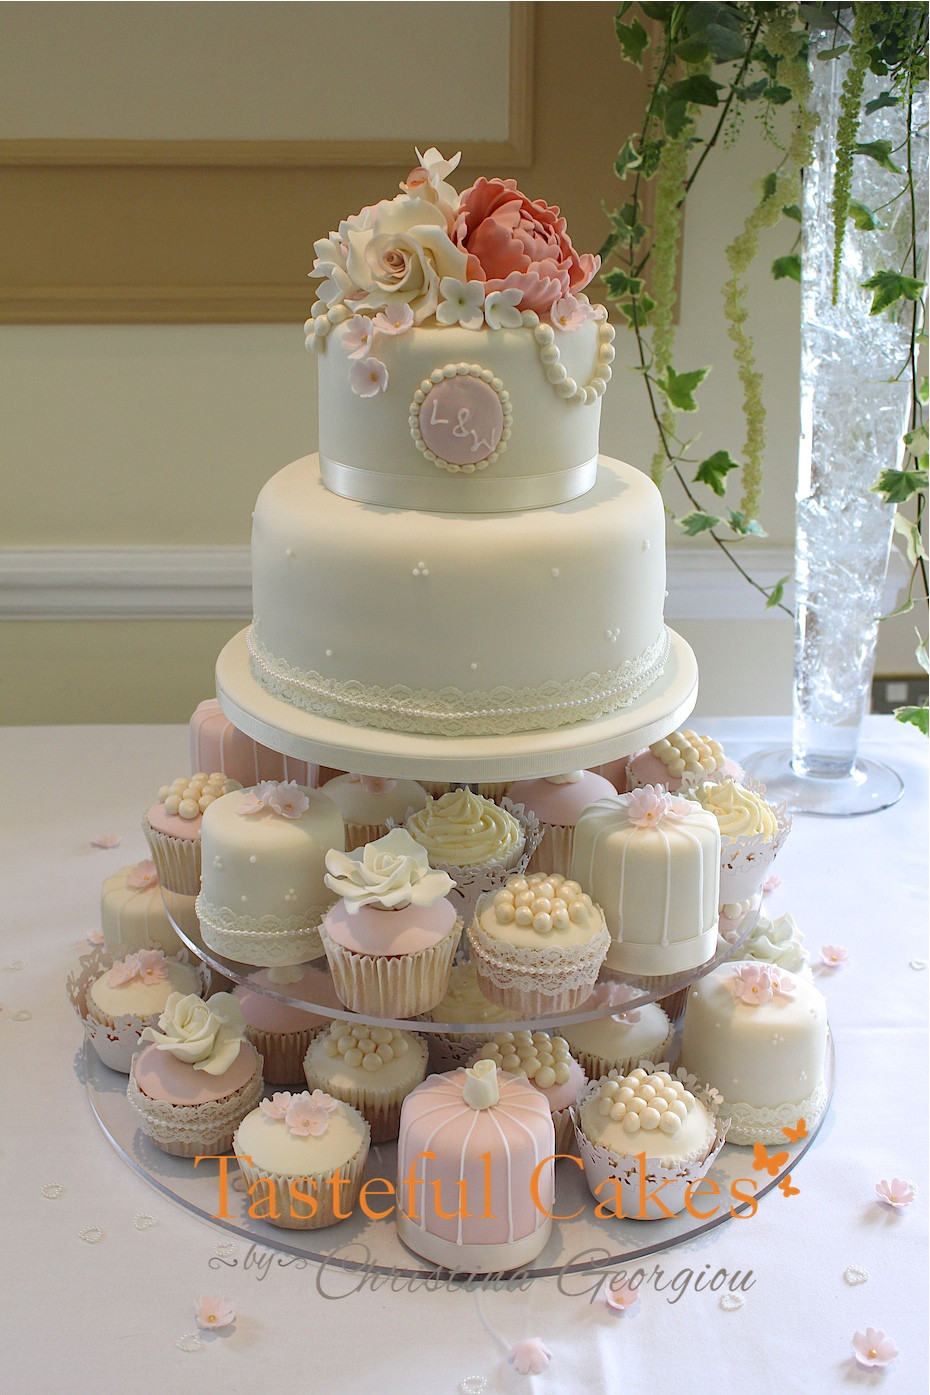 Wedding Cakes With Cupcakes On Tiers
 Tasteful Cakes By Christina Georgiou